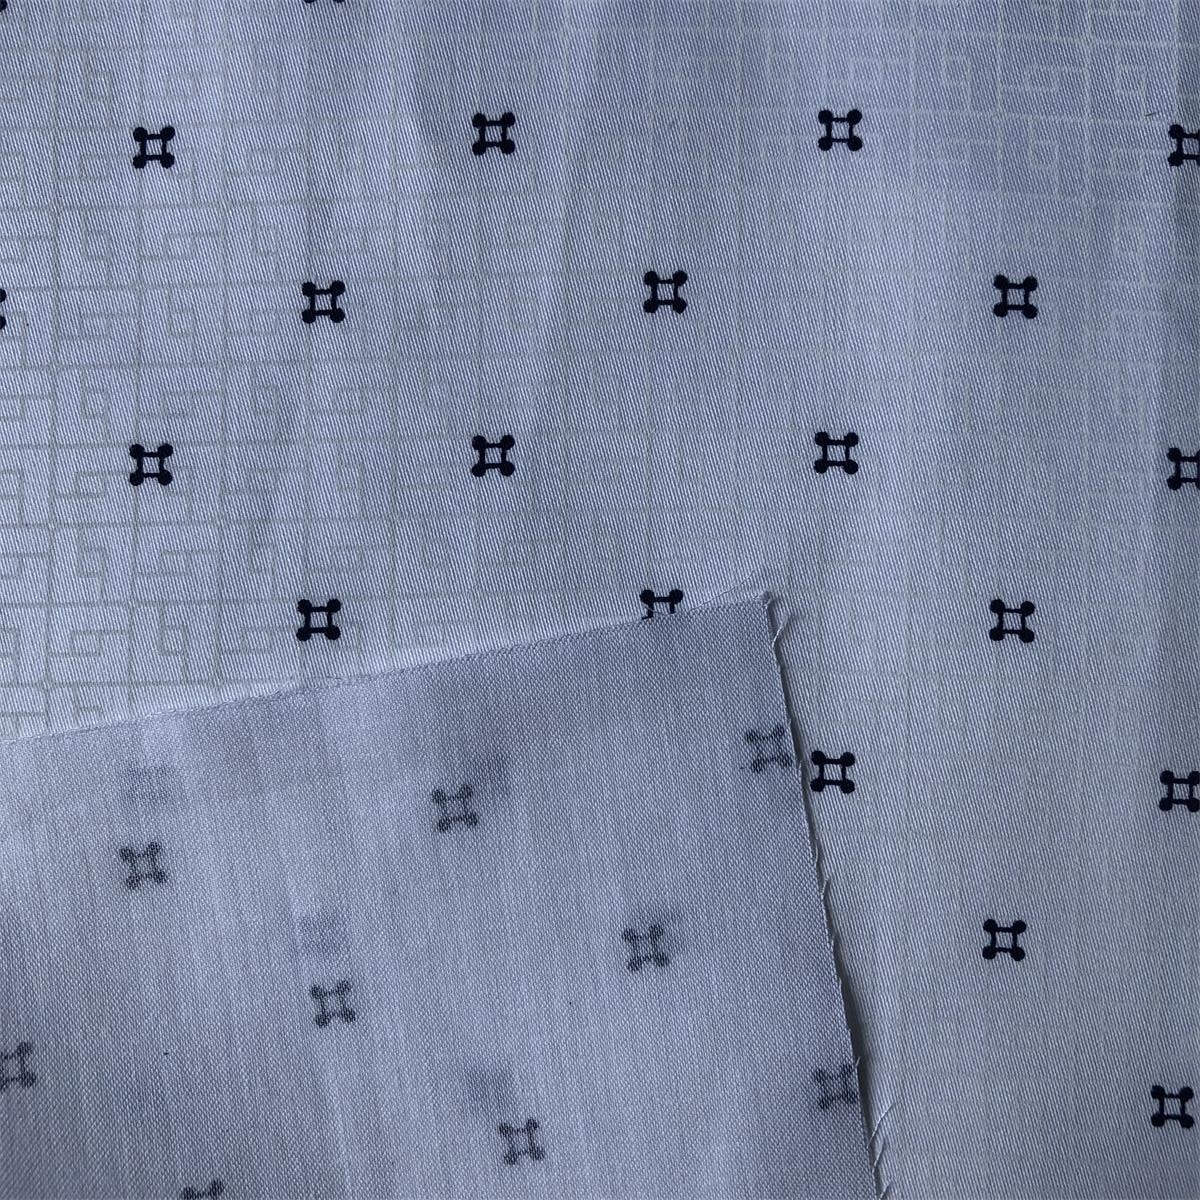 China Textile Cotton fabric fashion design soft comfortable 100 cotton poplin printed silky soft shirts fabric for mens shirts